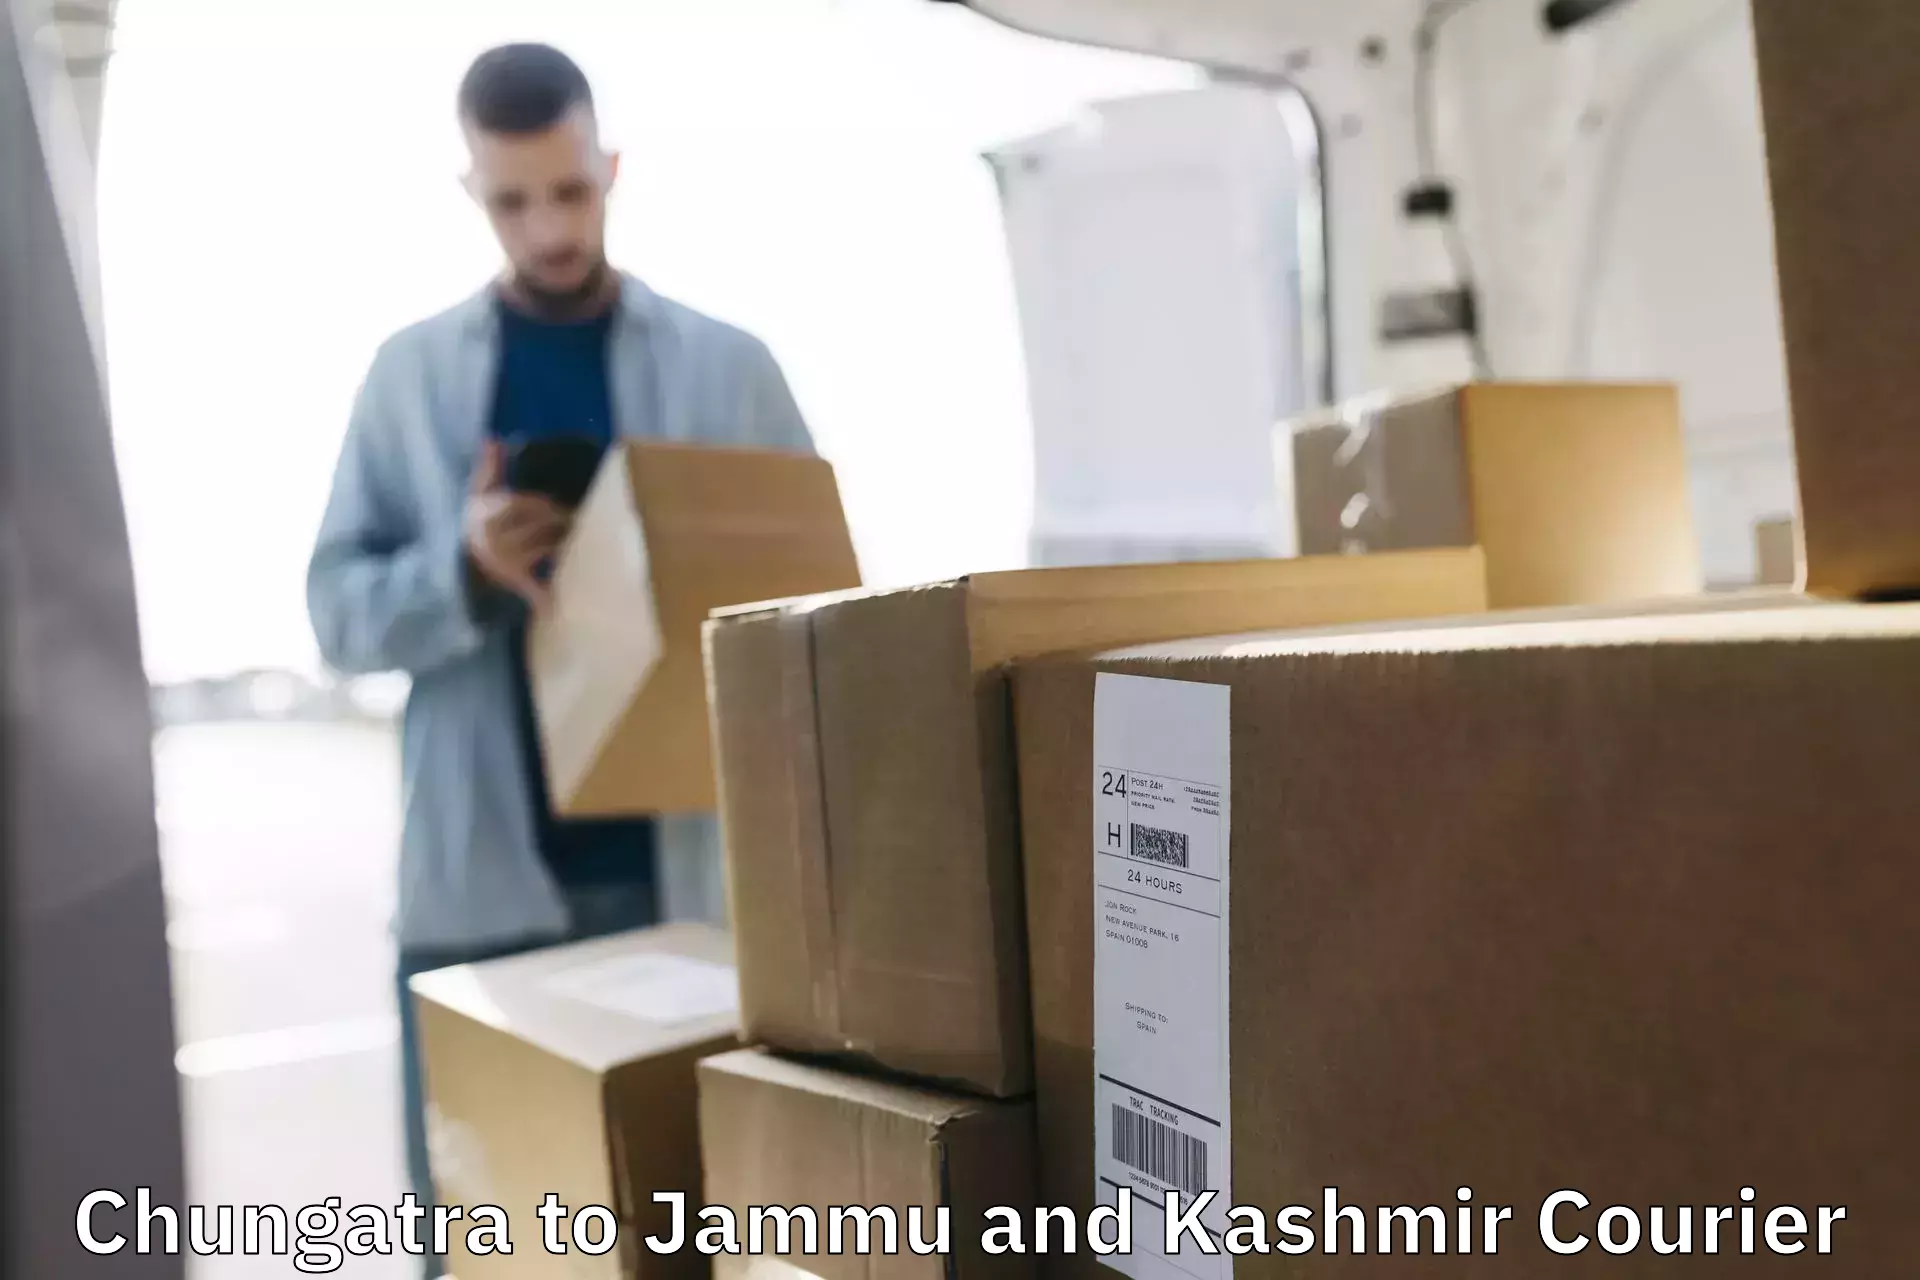 Customizable delivery plans Chungatra to Srinagar Kashmir